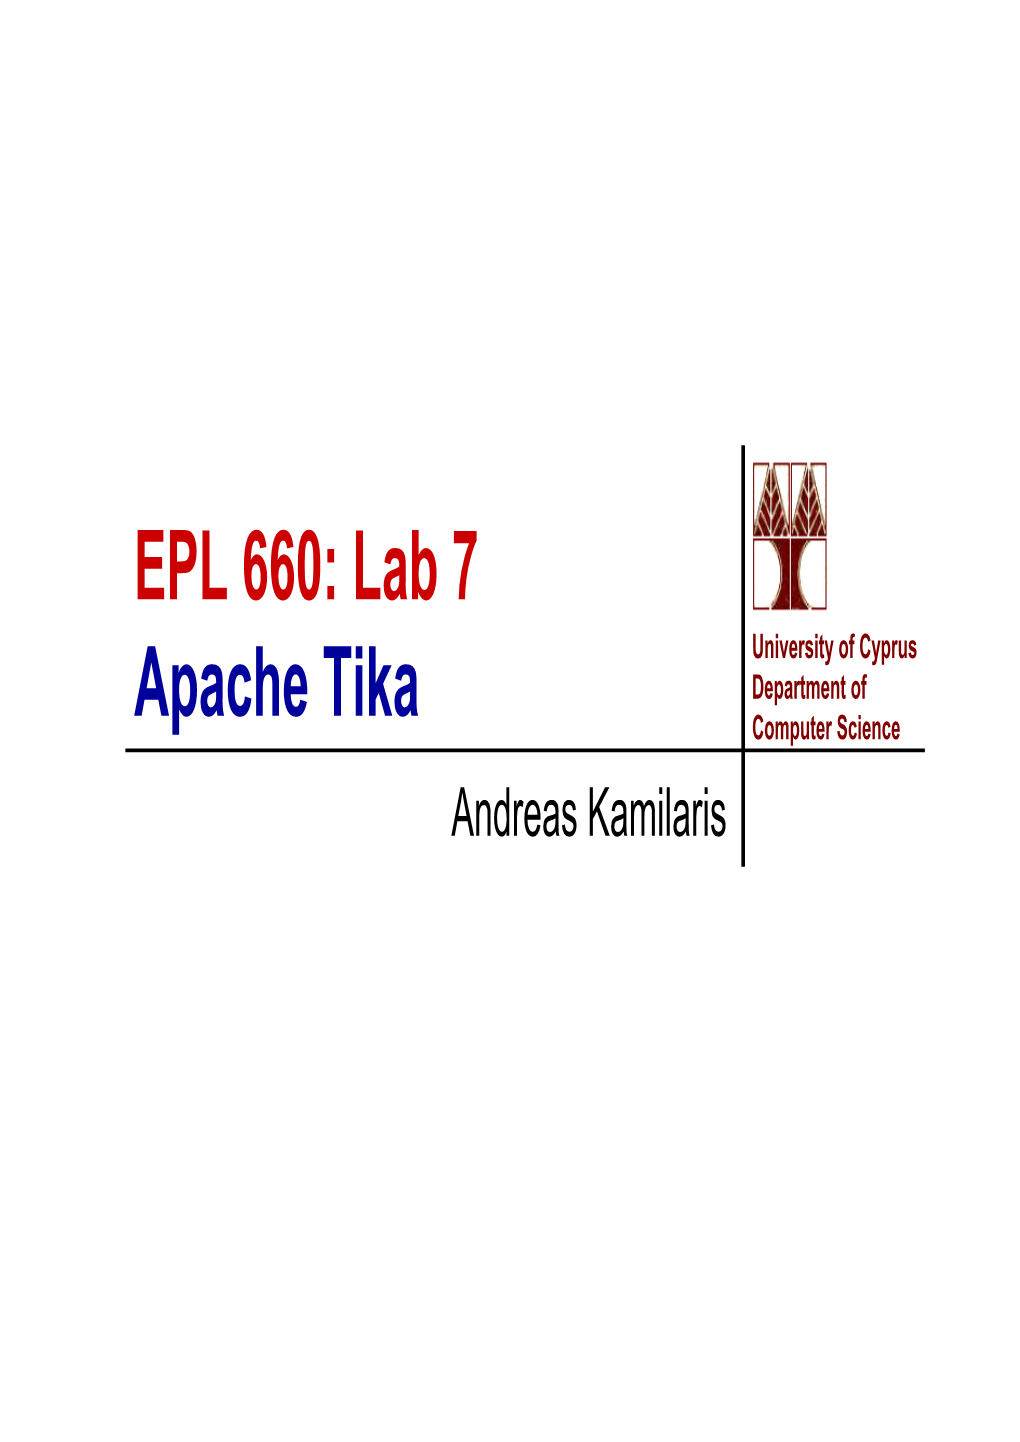 What Is Apache Tika? University of Cyprus